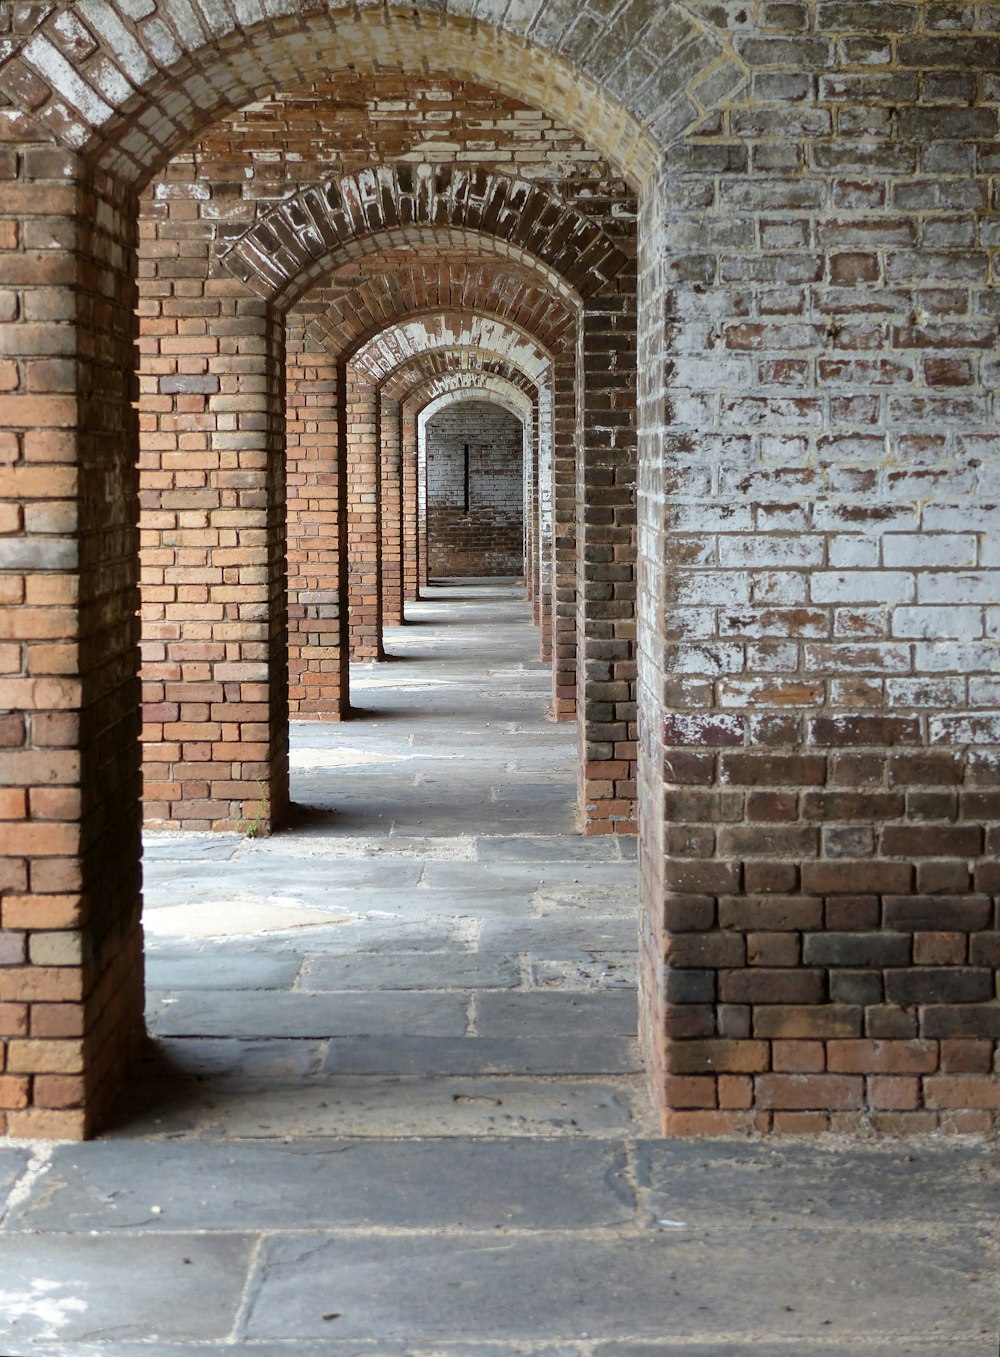 a brick wall with a door and a brick walkway